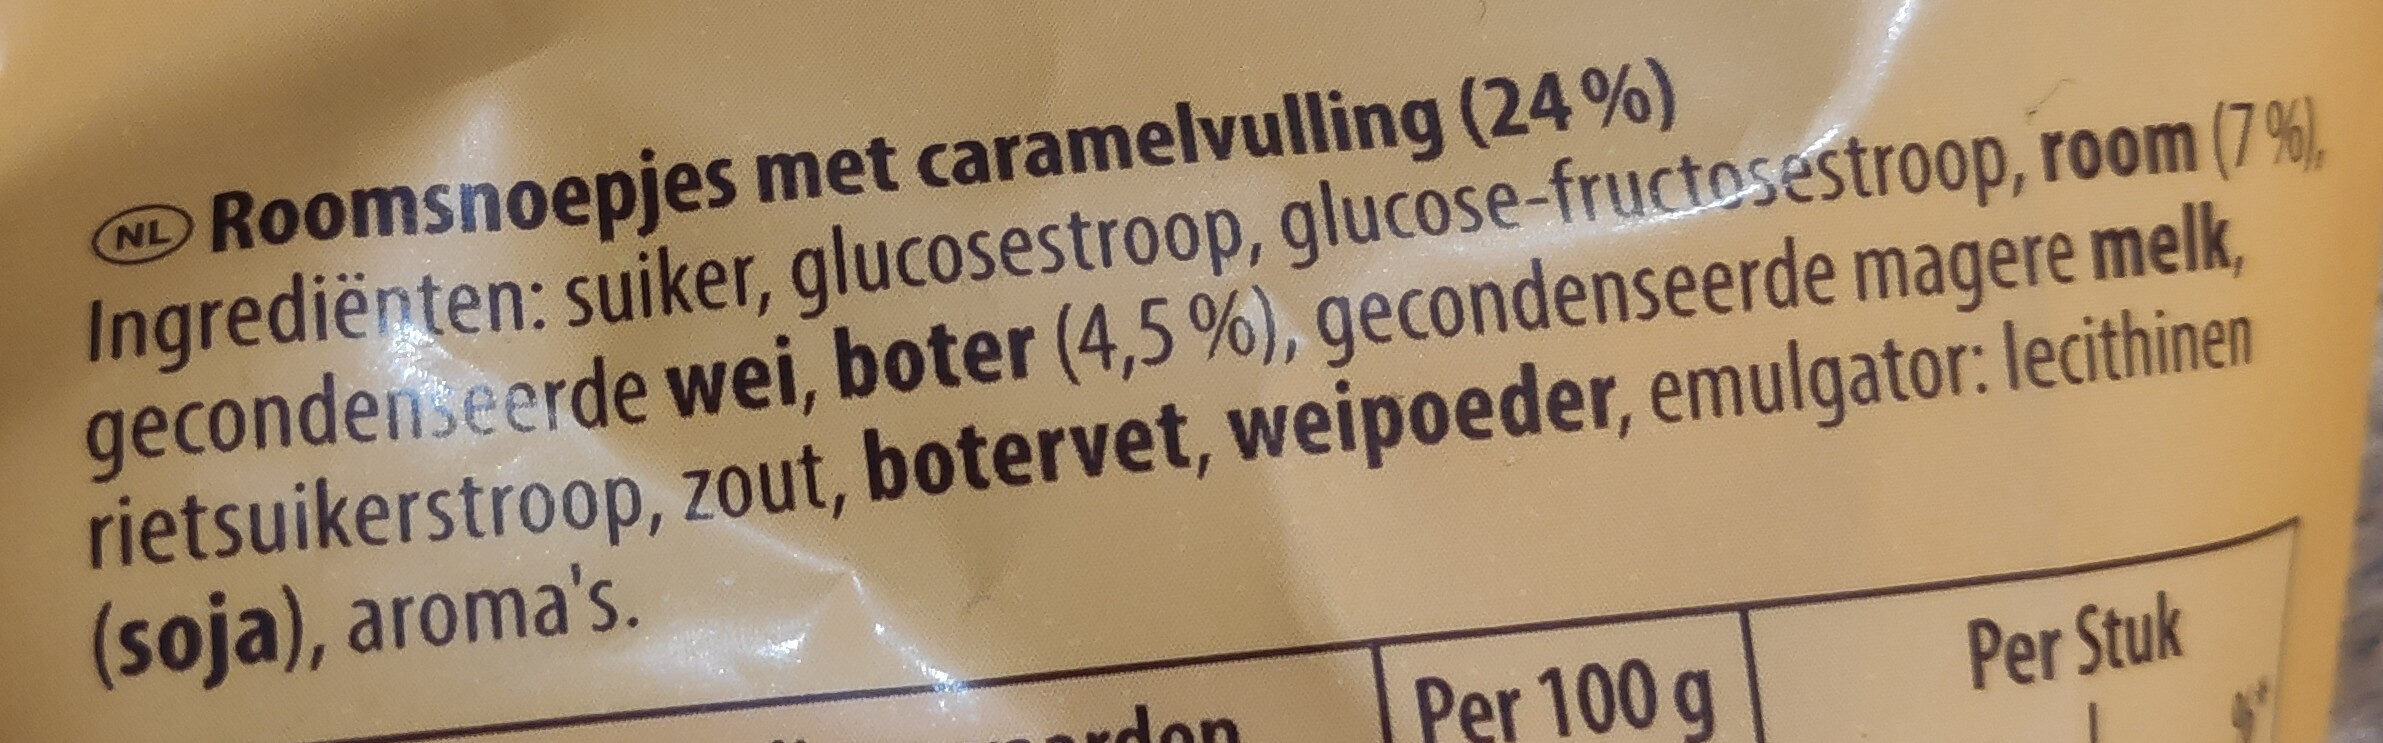 Caramel & Crème - Ingredients - nl